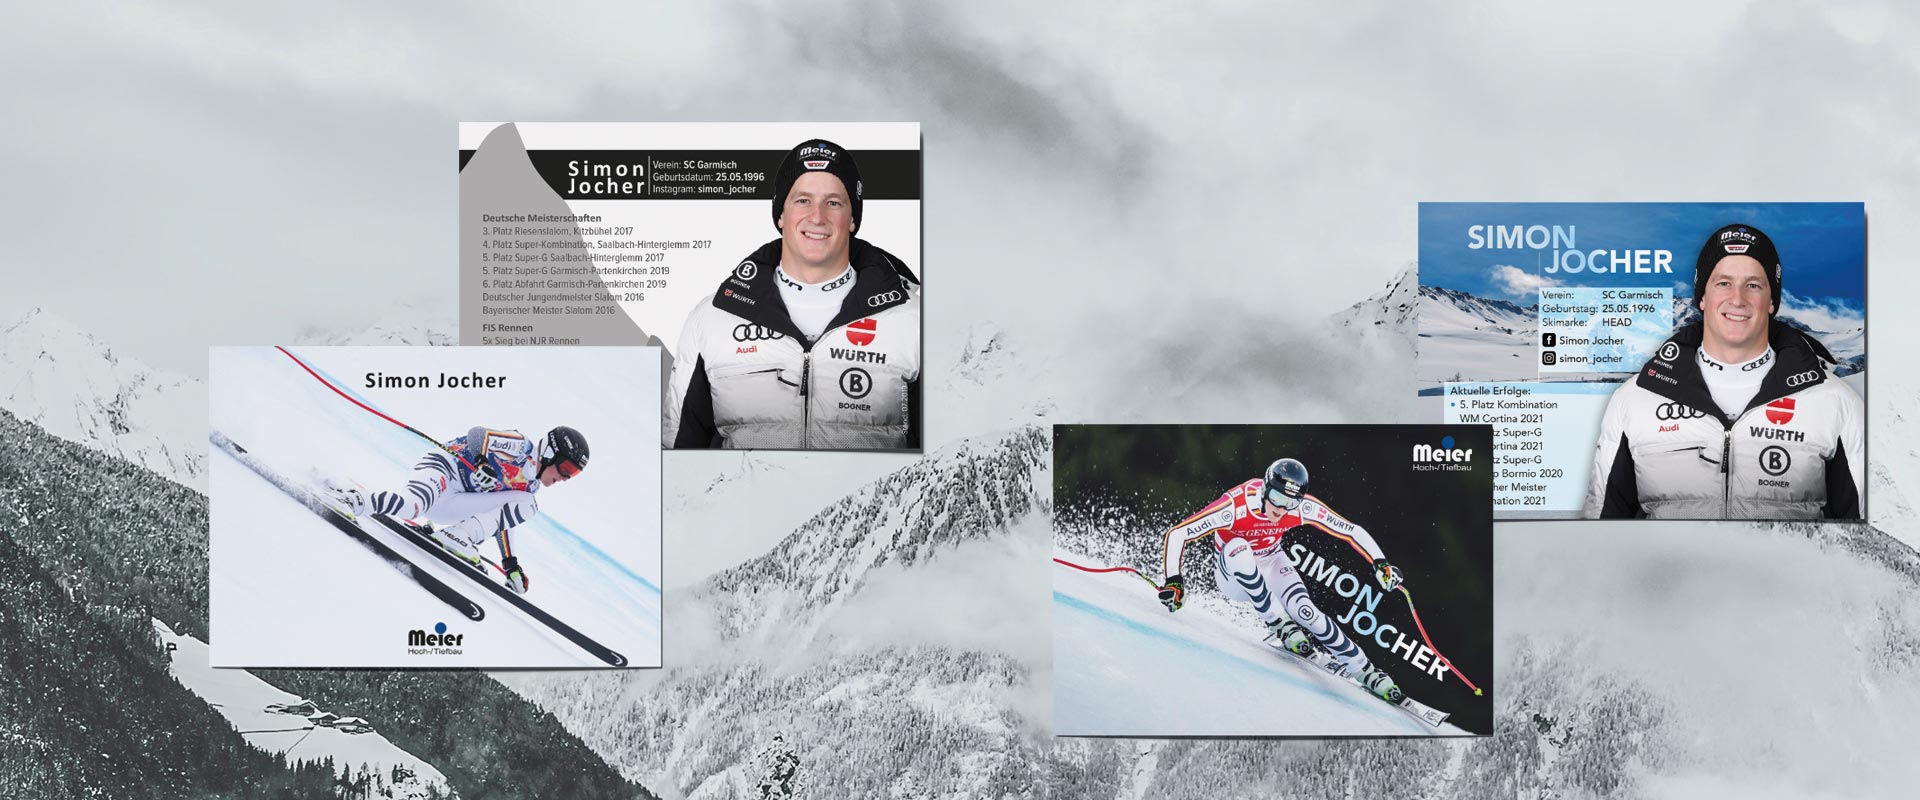 floss-design erstellt Autogrammkarten für Simon Jocher, Ski-Rennfahrer